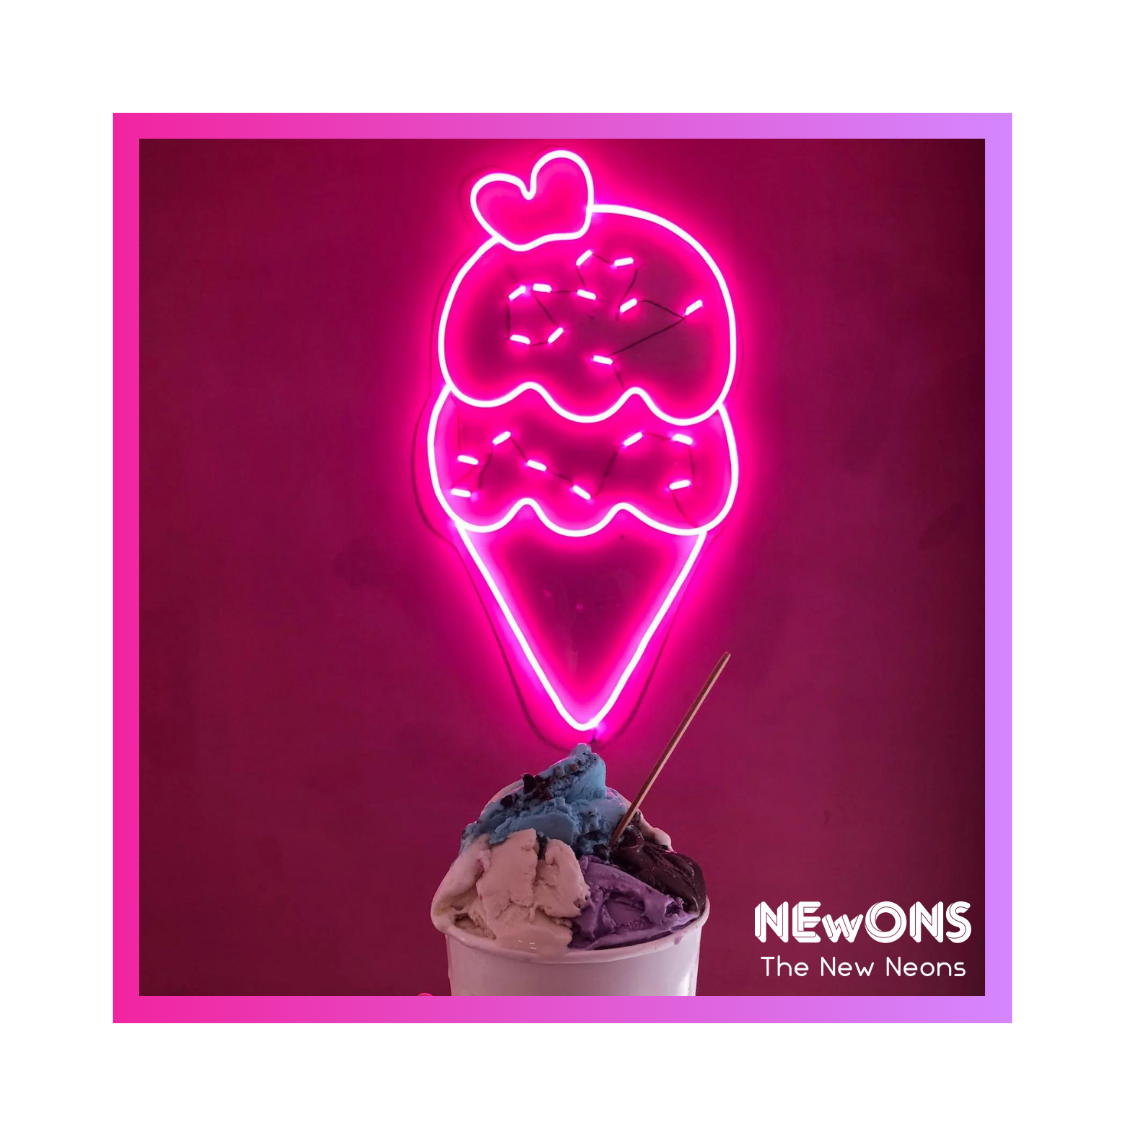 Soft Ice cream - handmade neon sign